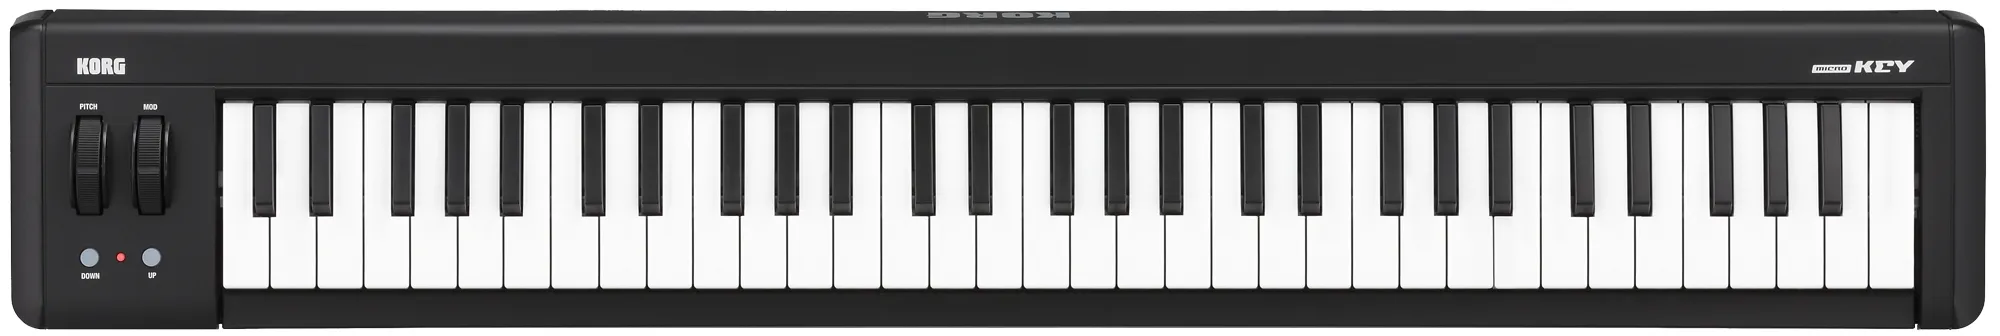 microKEY61 Kompaktes Midi-Keyboard